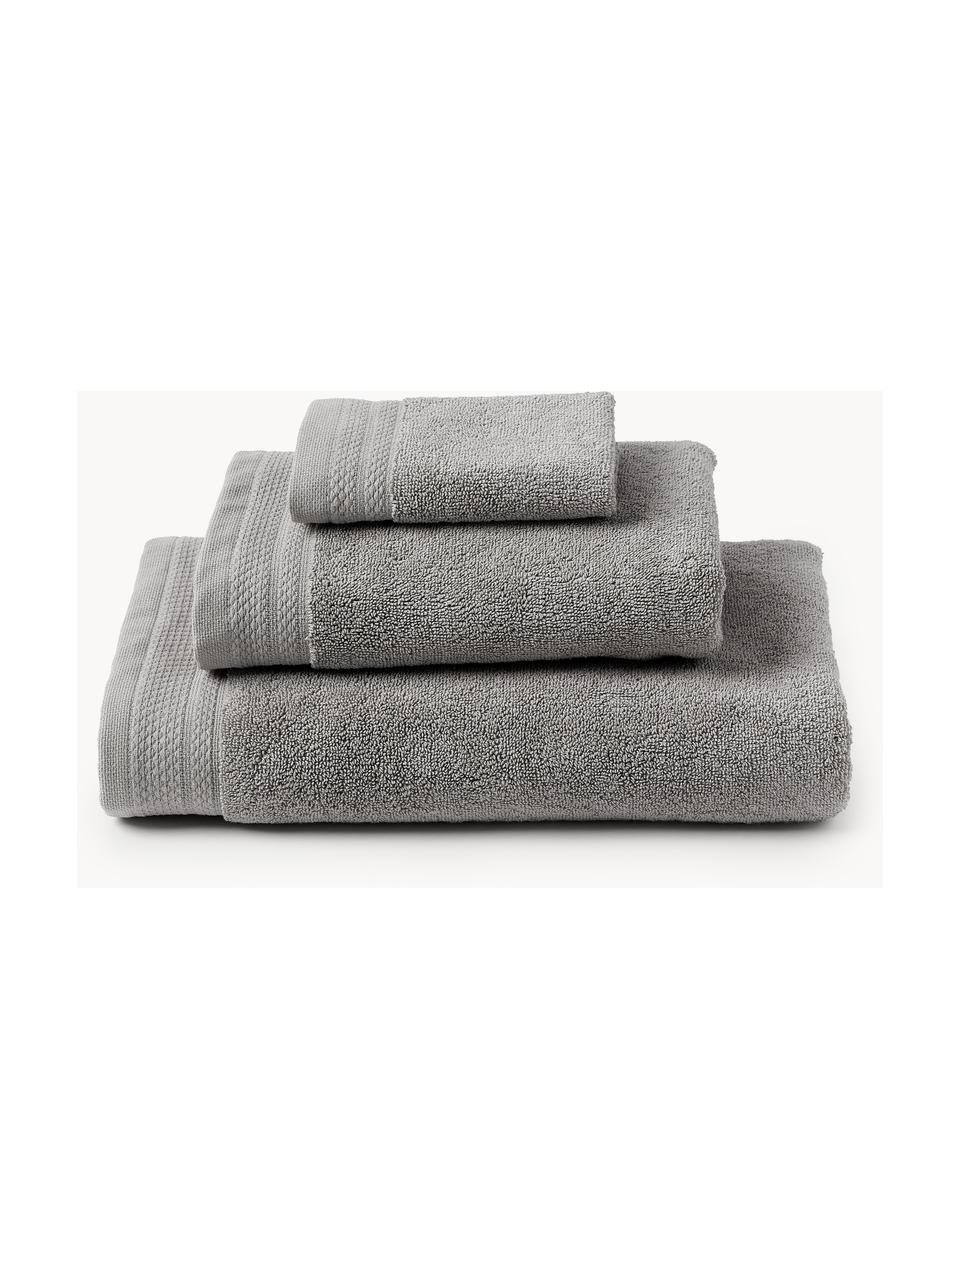 Set de toallas de algodón ecológico Premium, tamaños diferentes, 100% algodón ecológico con certificado GOTS (por GCL International, GCL-300517)
Gramaje superior 600 g/m², Gris oscuro, Set de 4 (toallas lavabo y toallas ducha)